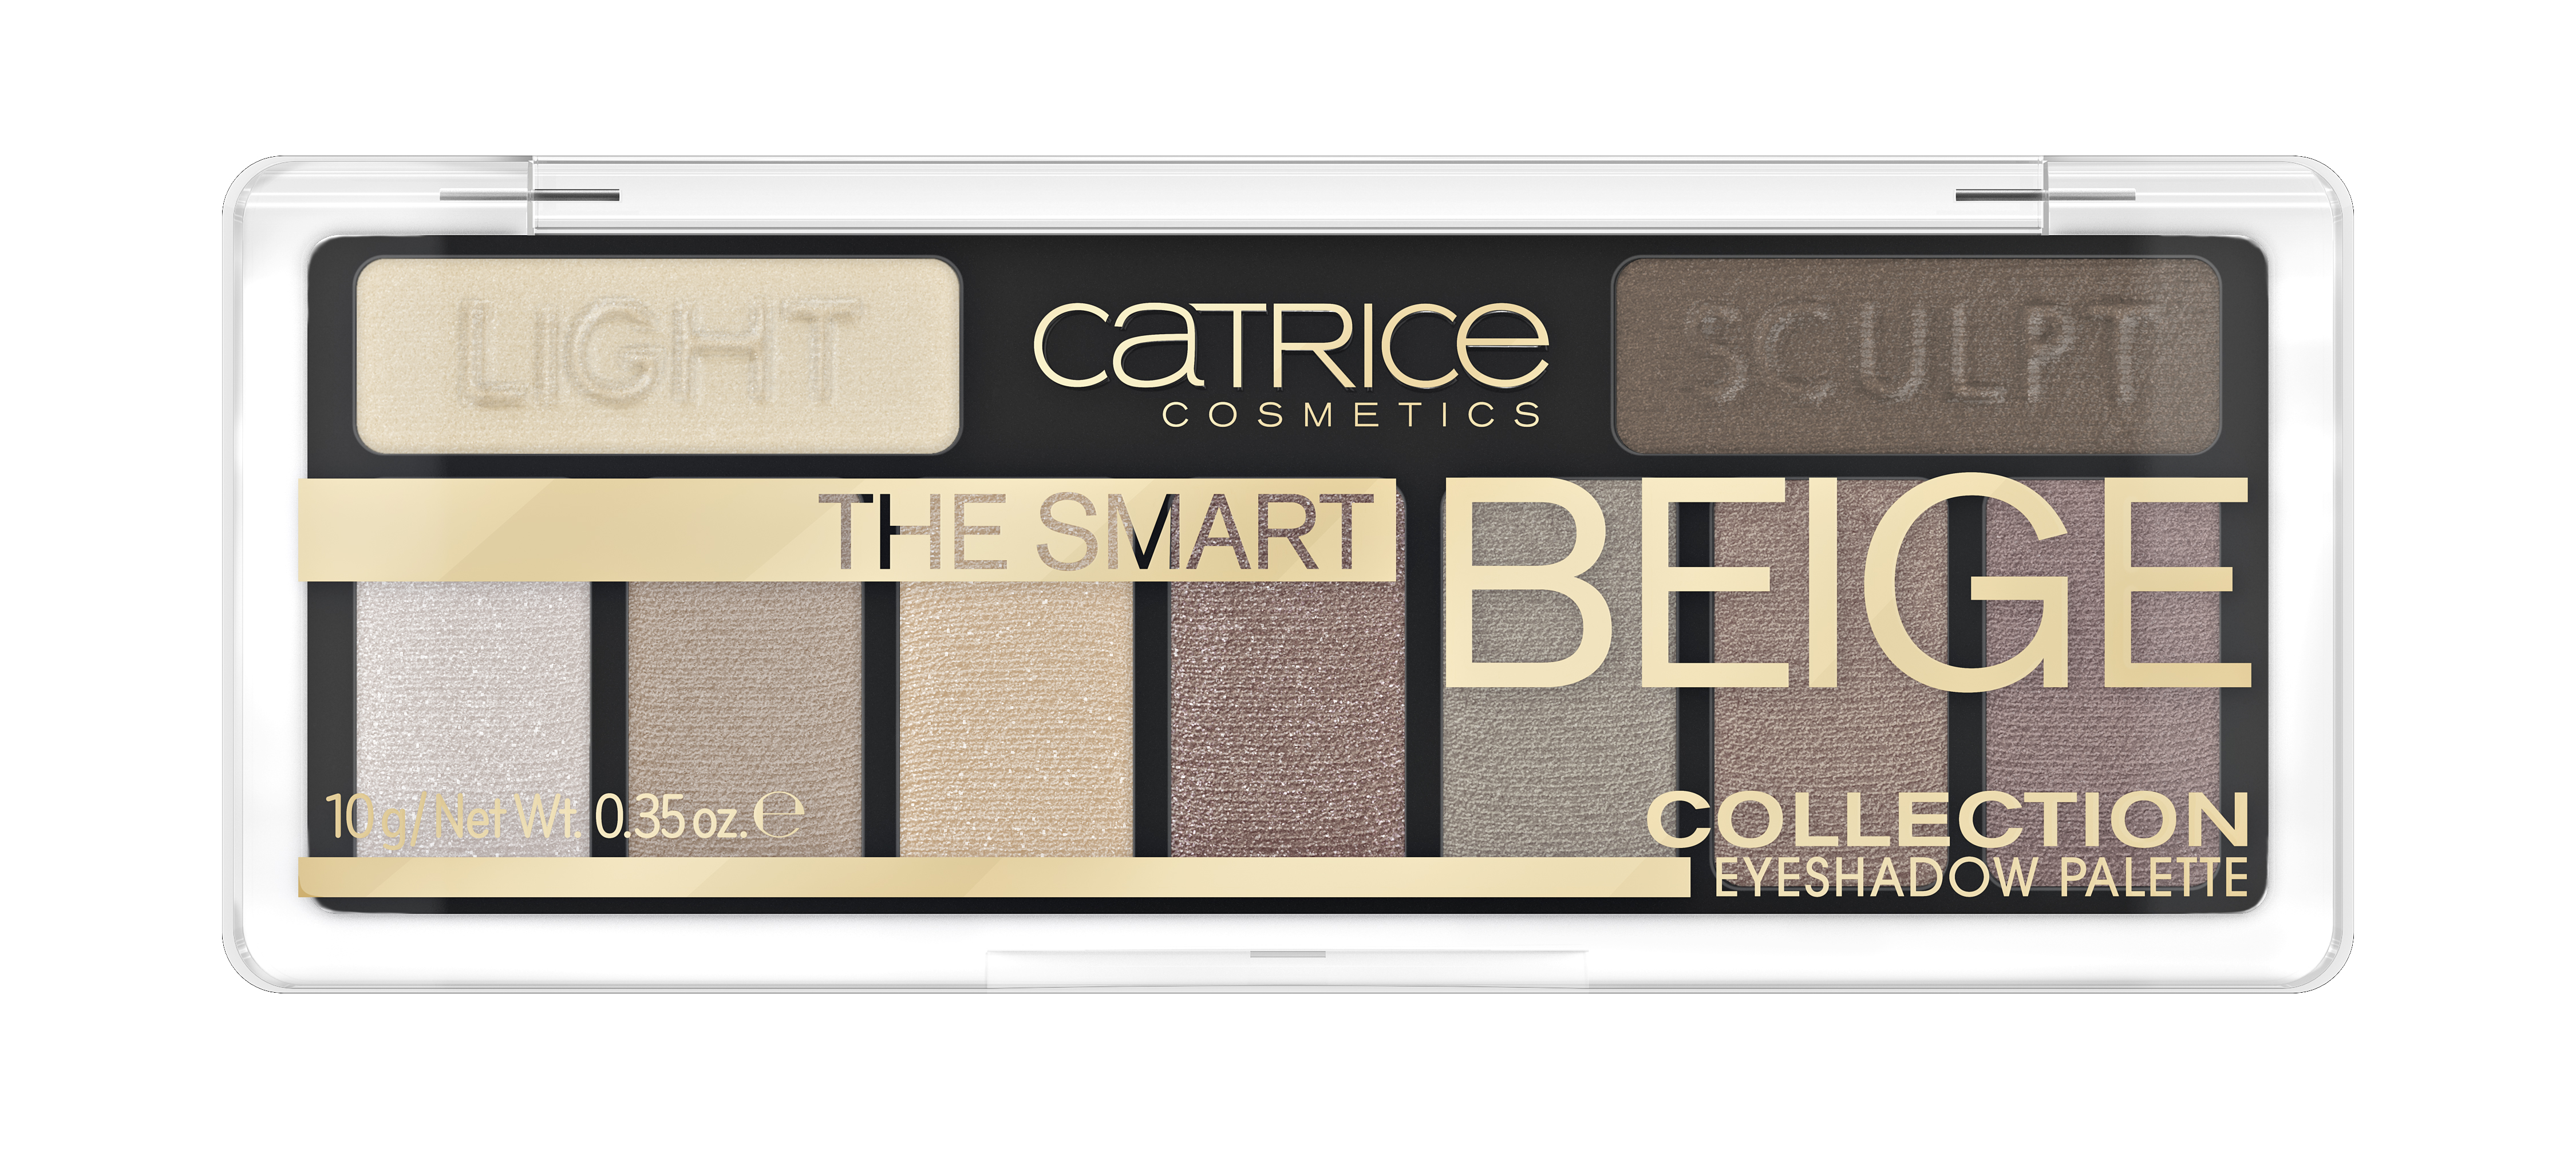 Catrice The Smart Beige Collection Eyeshadow Palette 010 - คาทริซเดอะสมาร์ทเบจคอลเล็คชั่นอายแชโดว์พาเลตต์010